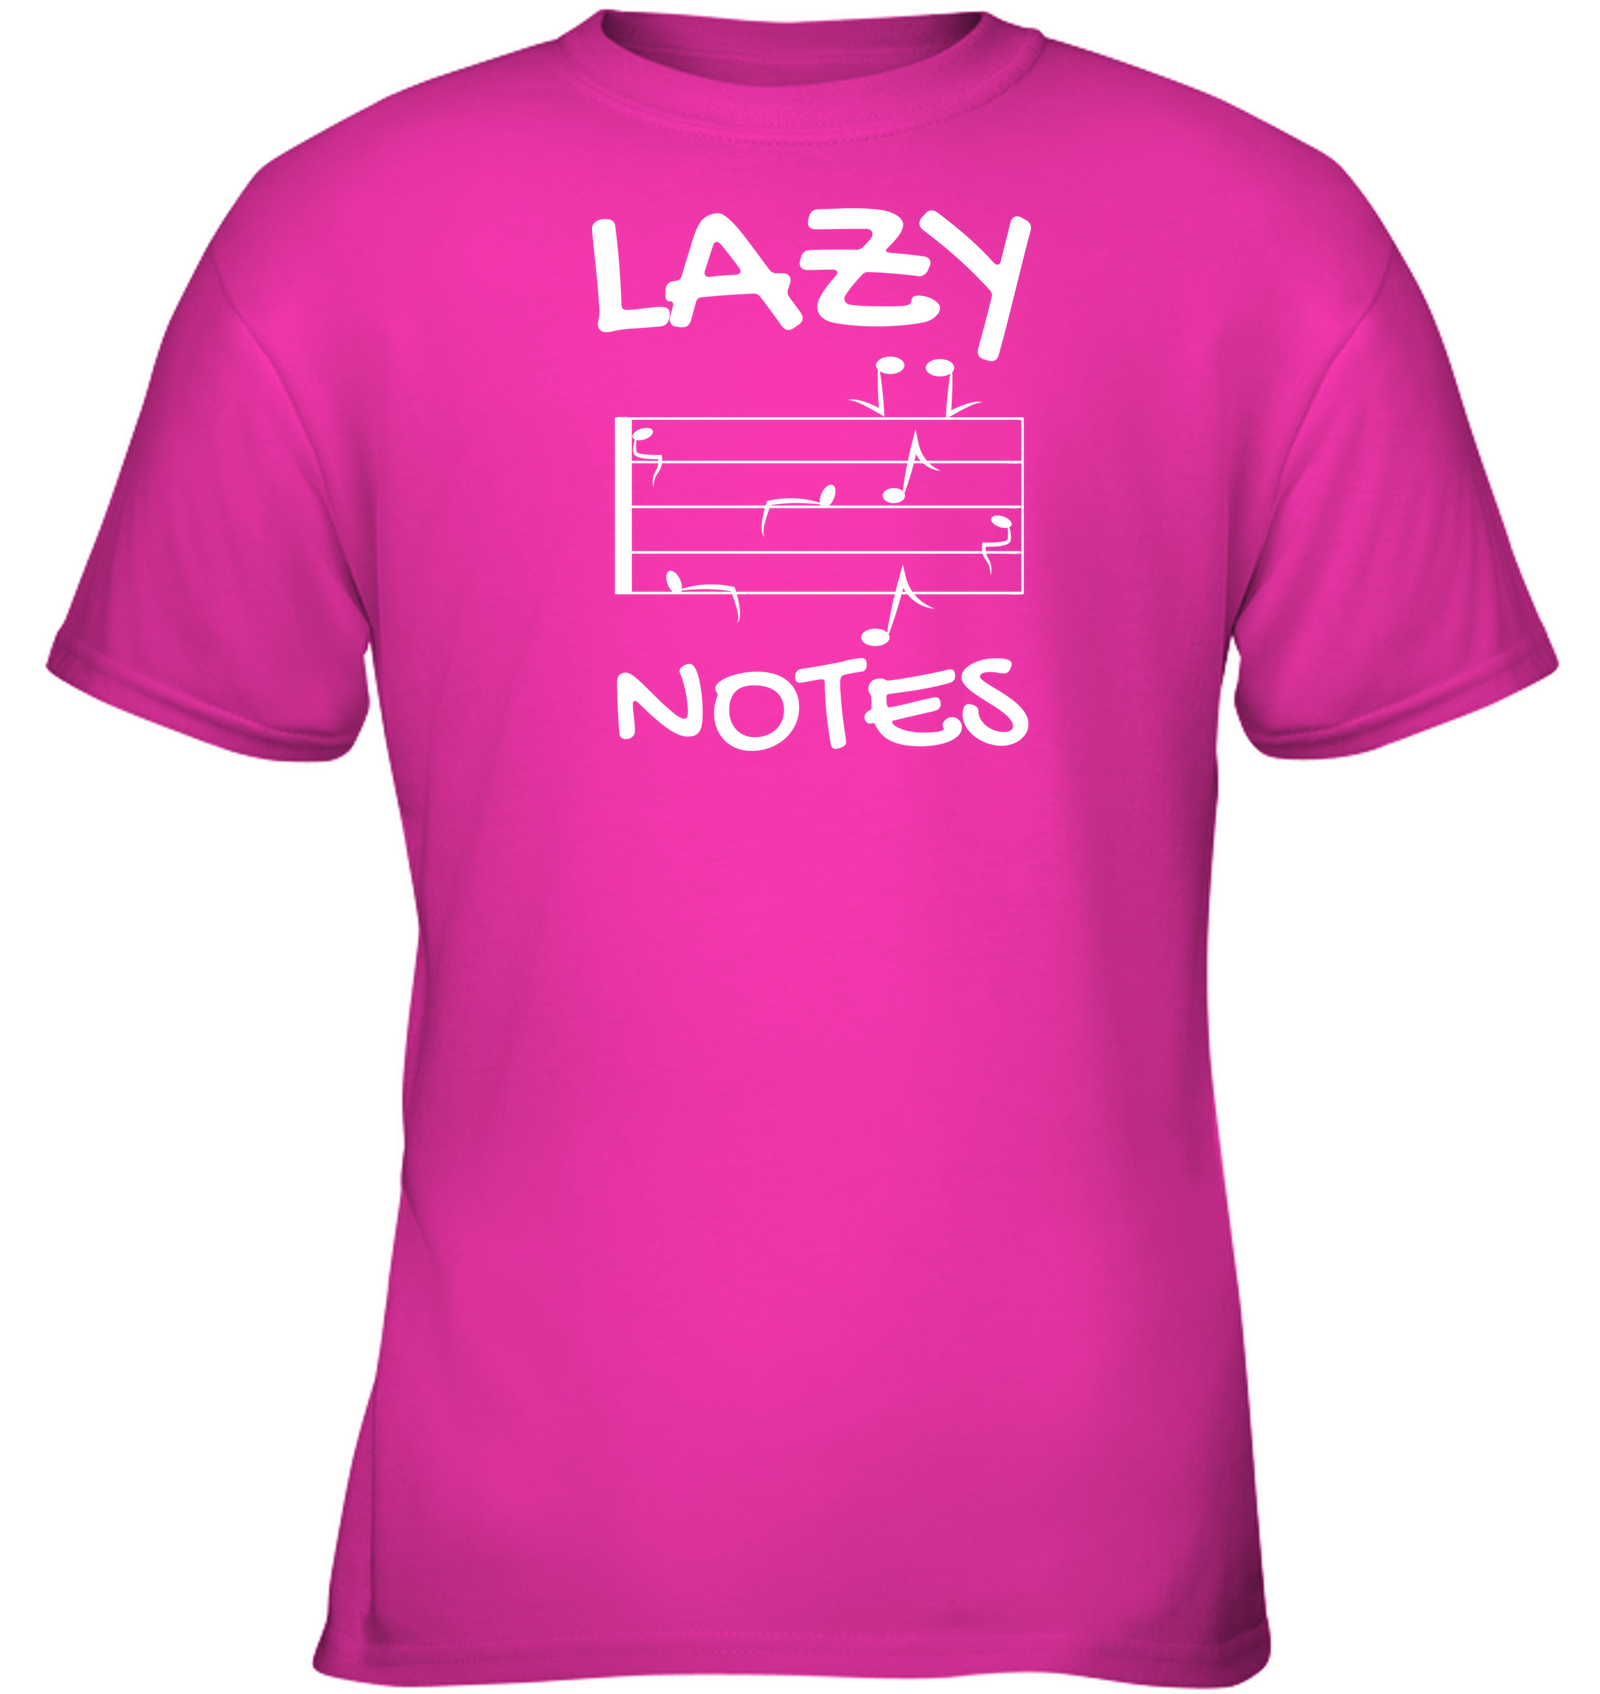 Lazy Notes - Gildan Youth Short Sleeve T-Shirt